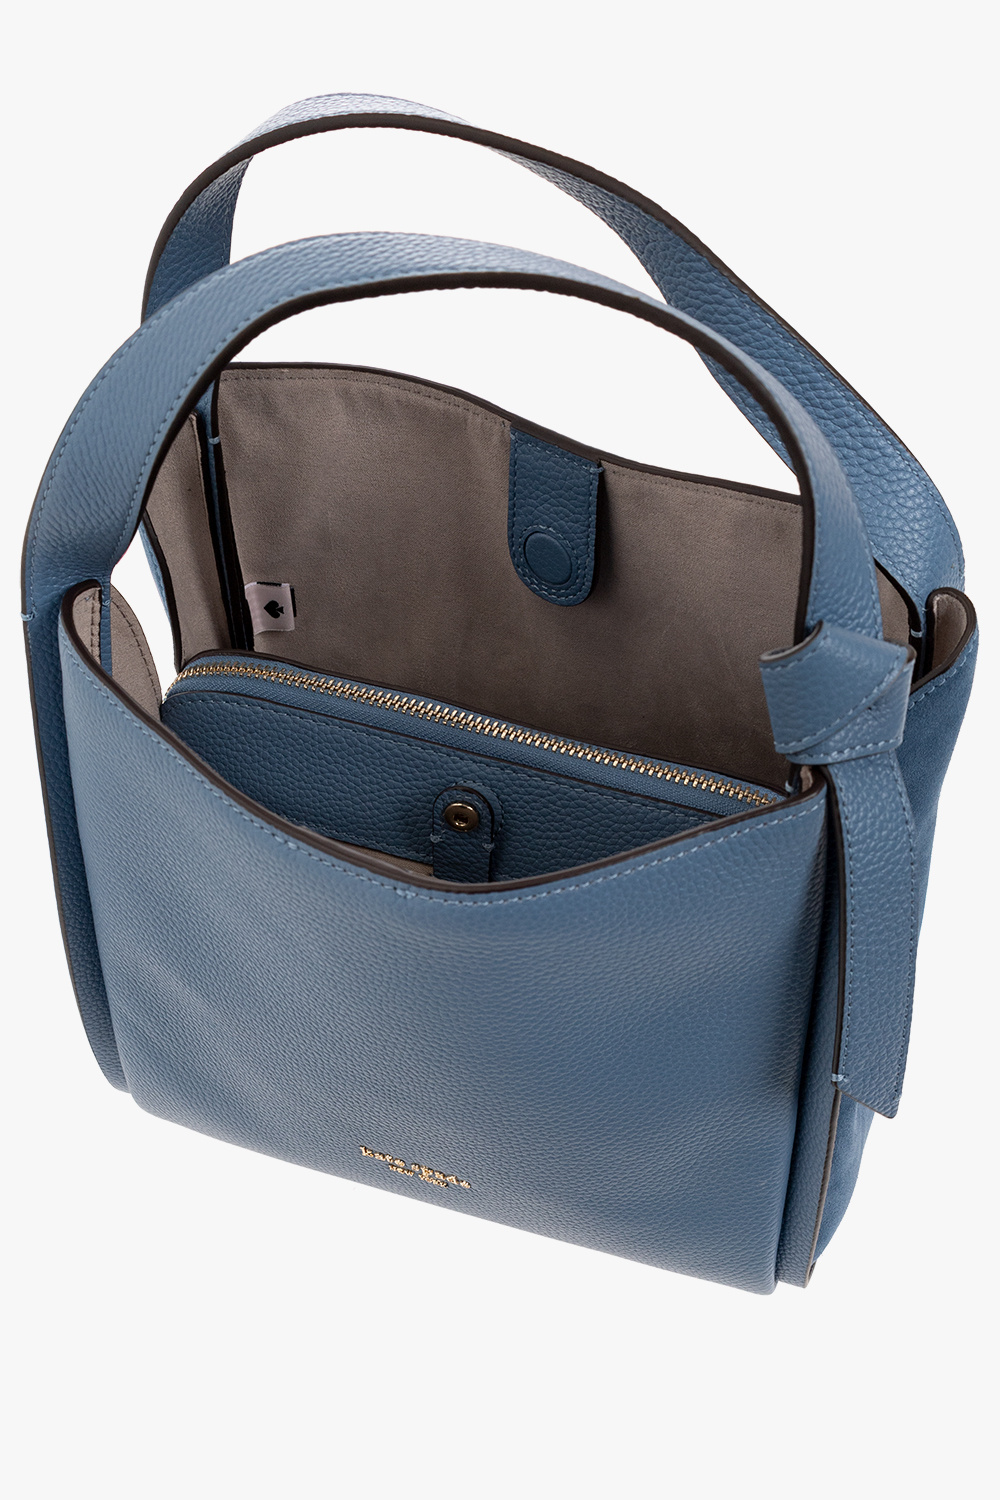 Kate Spade Knott Pebbled Leather Flap Crossbody (Watercolor Blue) Handbags  - ShopStyle Shoulder Bags